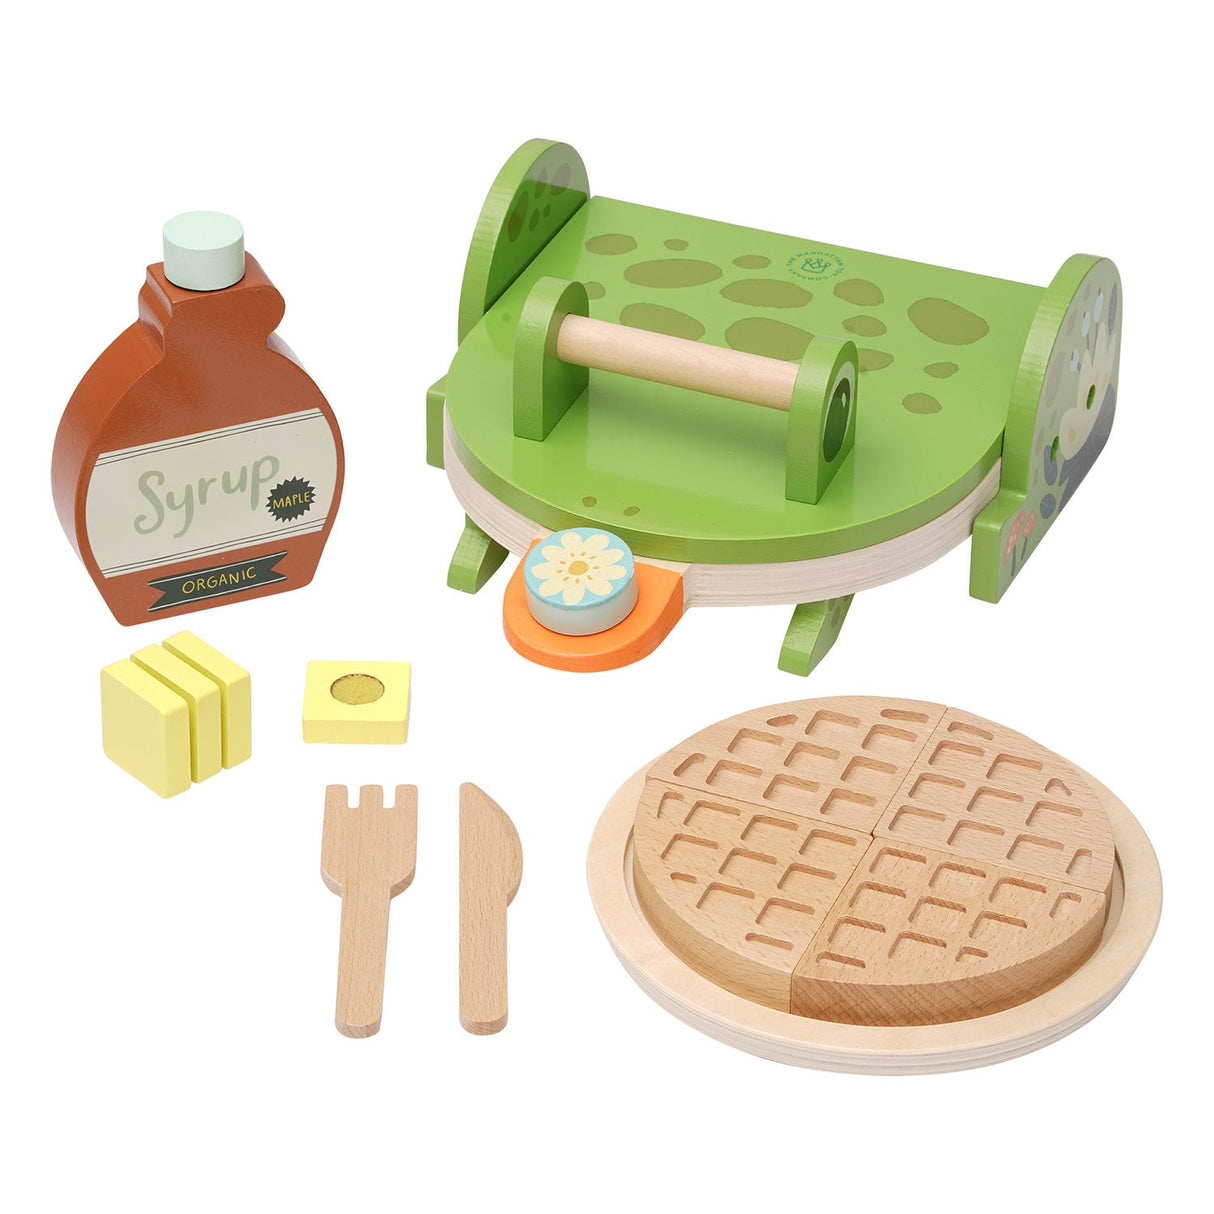 Ribbit Waffle Maker by Manhattan Toy